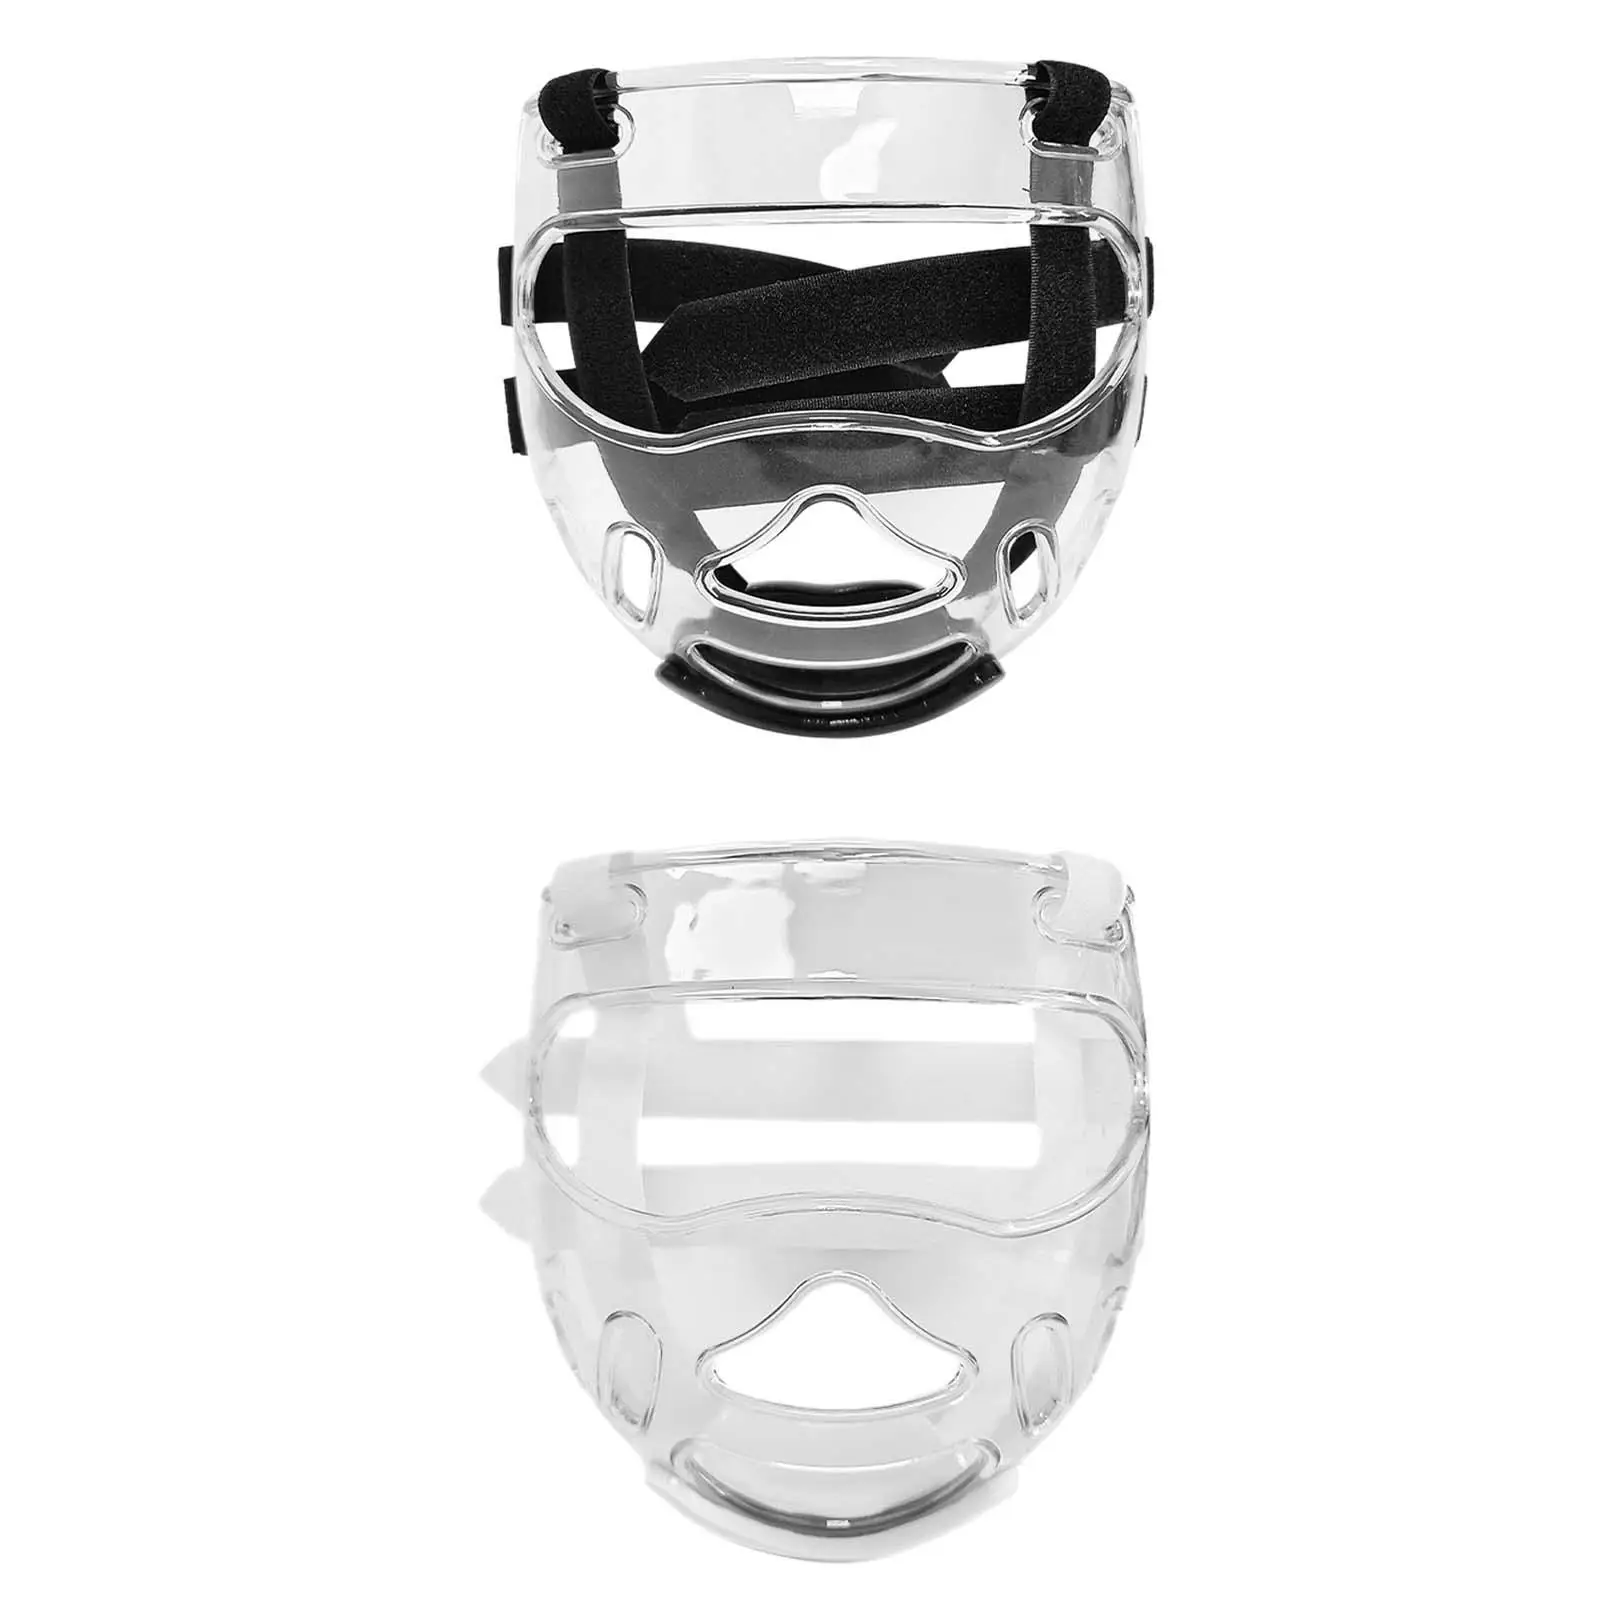 Taekwondo Mask Taekwondo Face Shield Portable Taekwondo Sparring Mask for Kickboxing Fighting Boxin Muay Thai Training Equipment